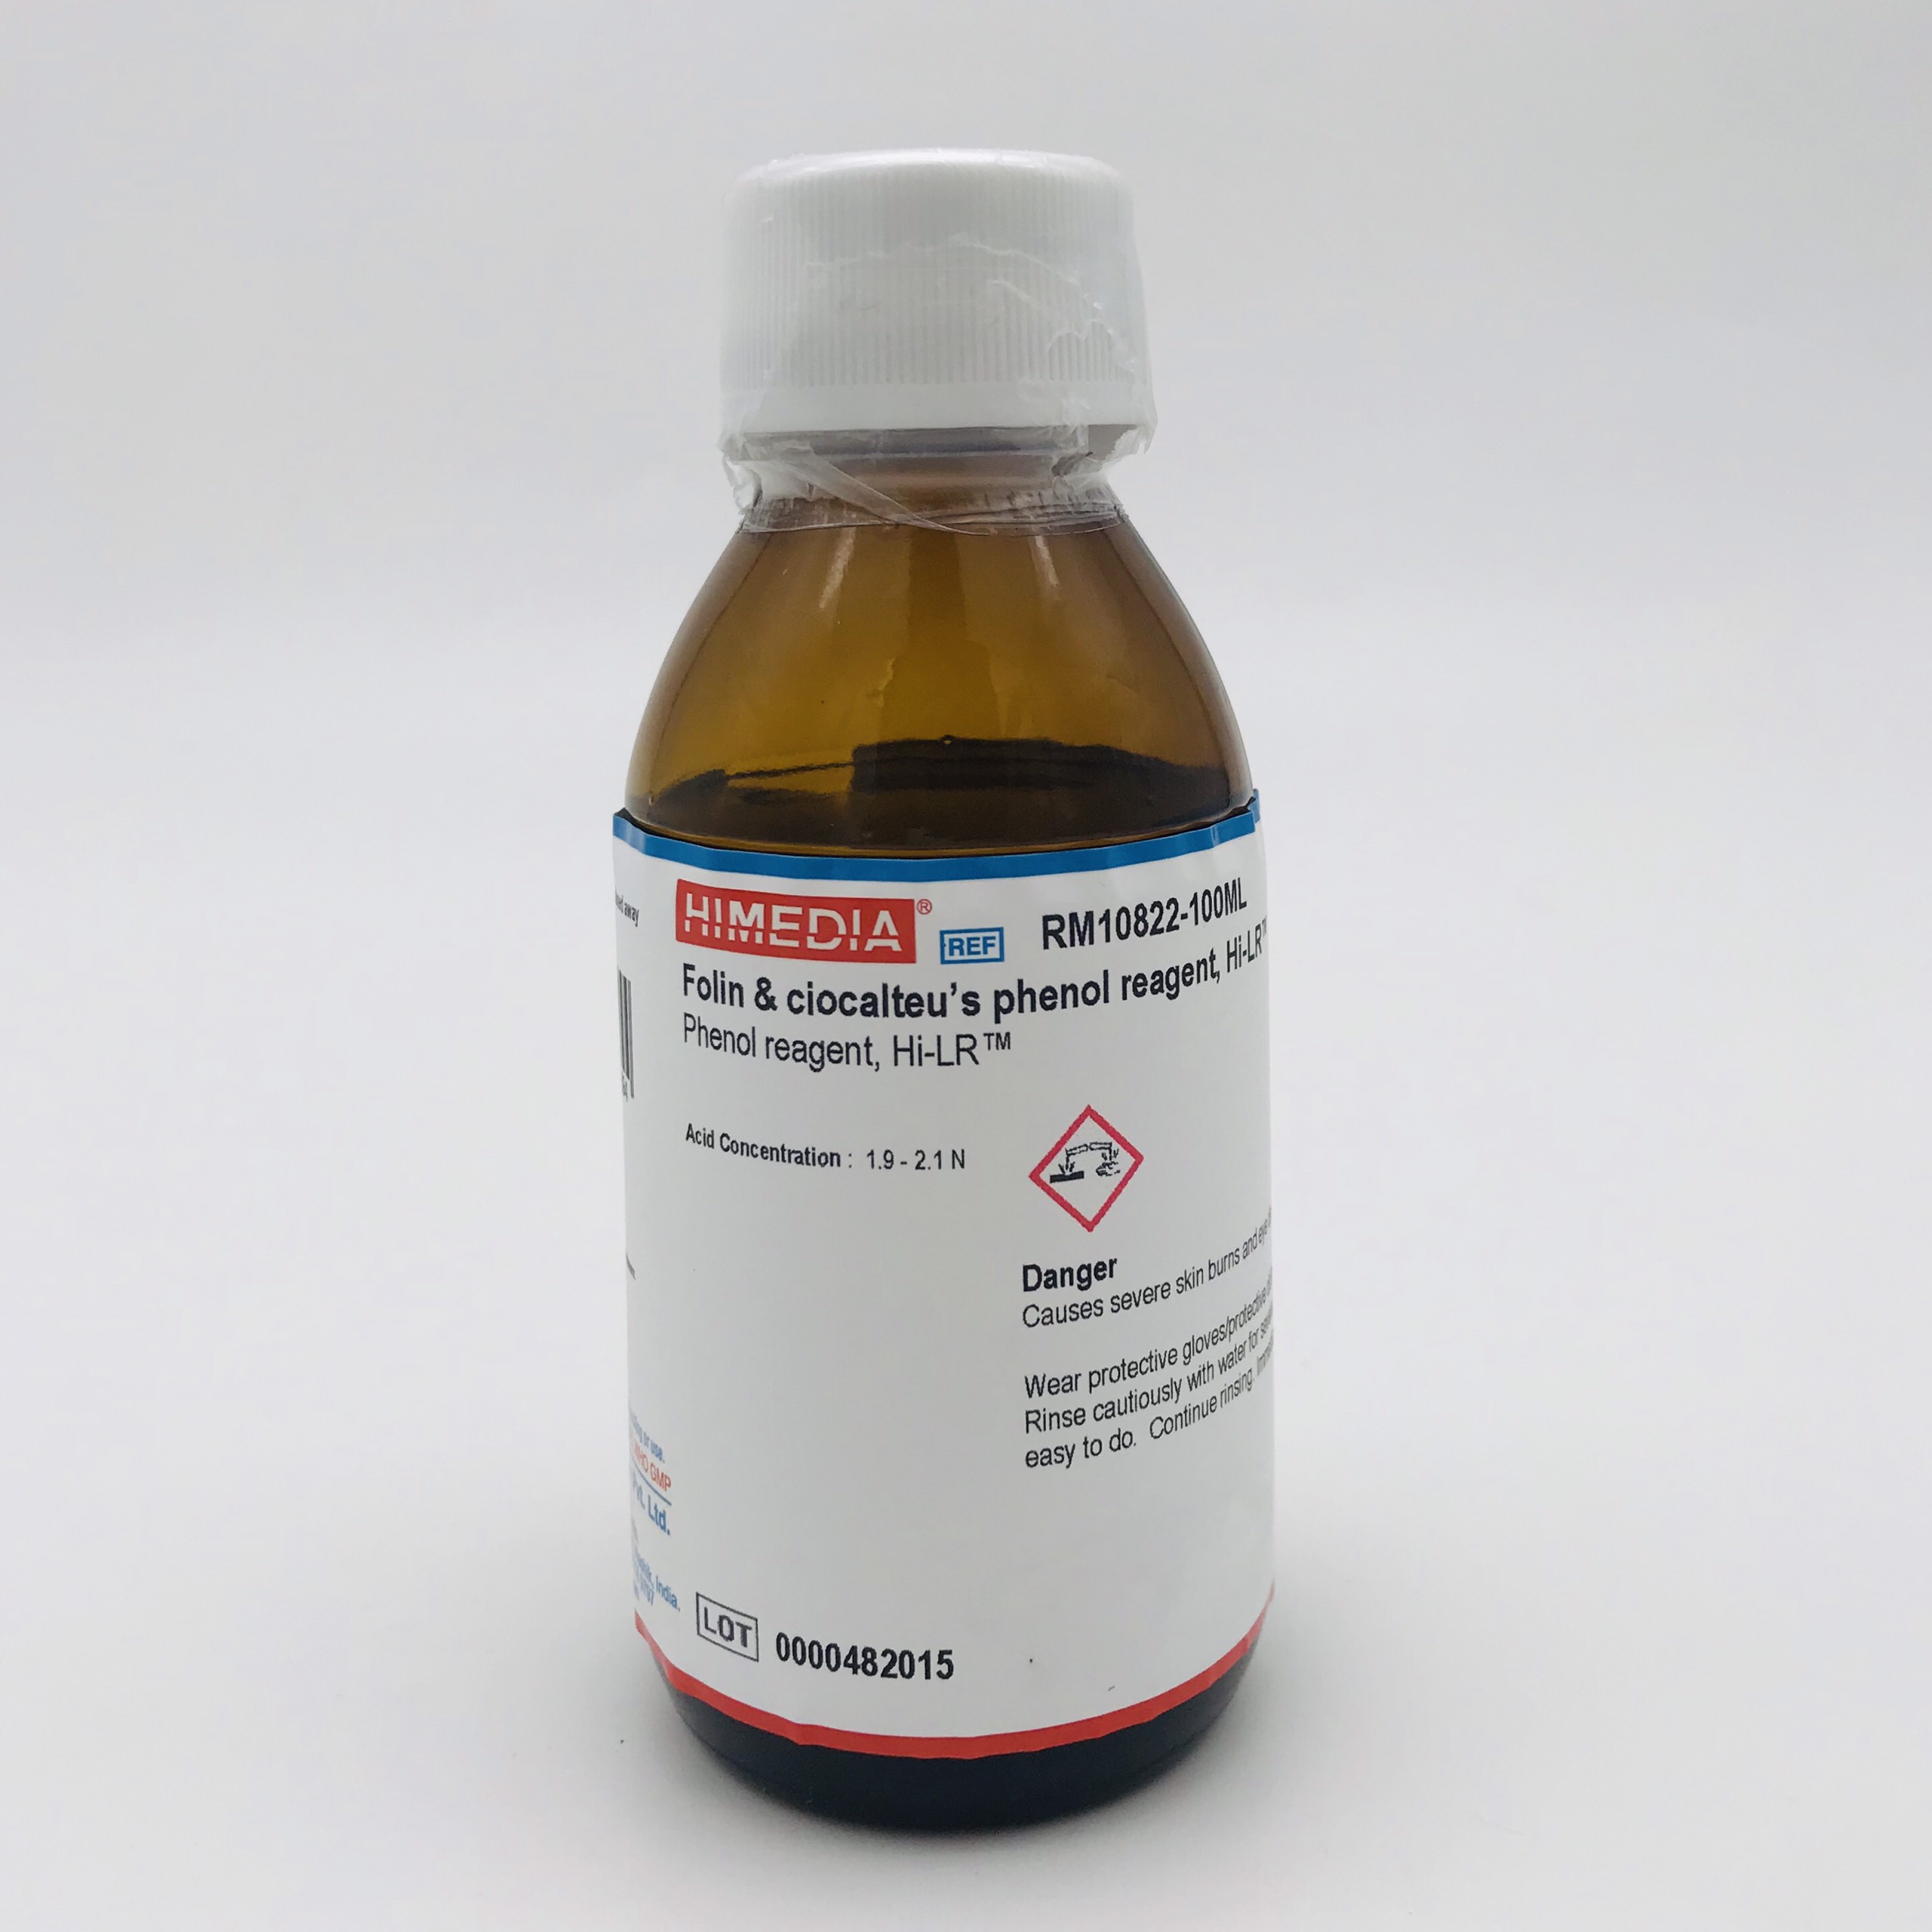 Folin & ciocalteu’s phenol reagent (Himedia)